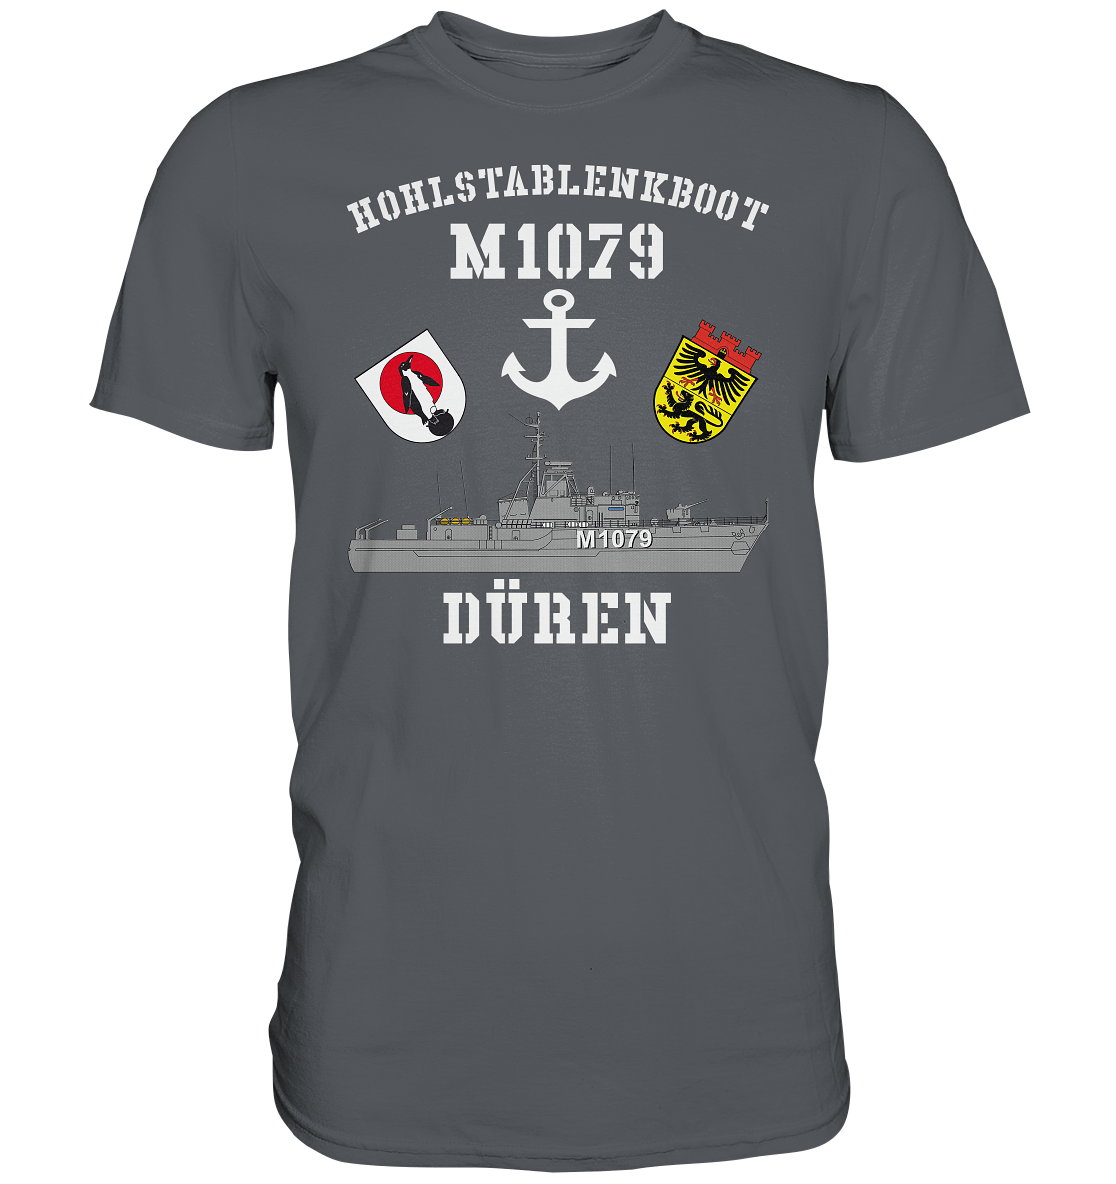 M1079 HL-Boot DÜREN - Premium Shirt